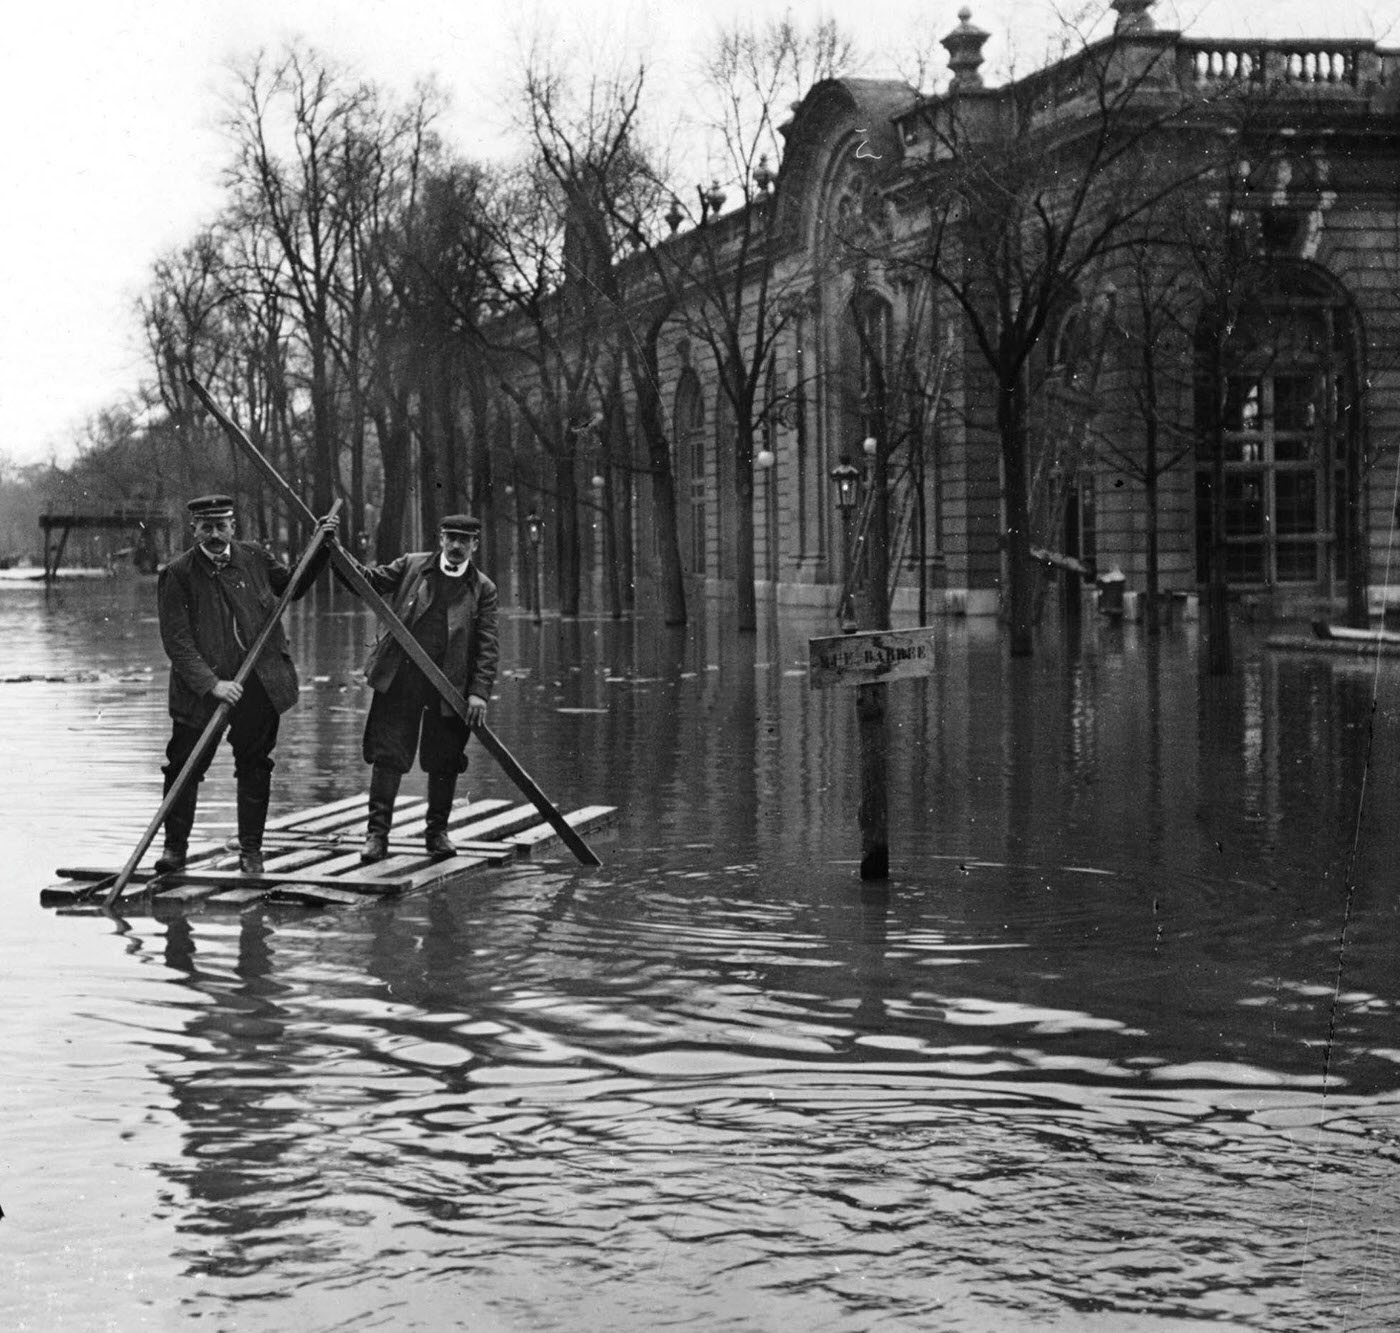 Flood in Paris after rise in Seine river, 1910.